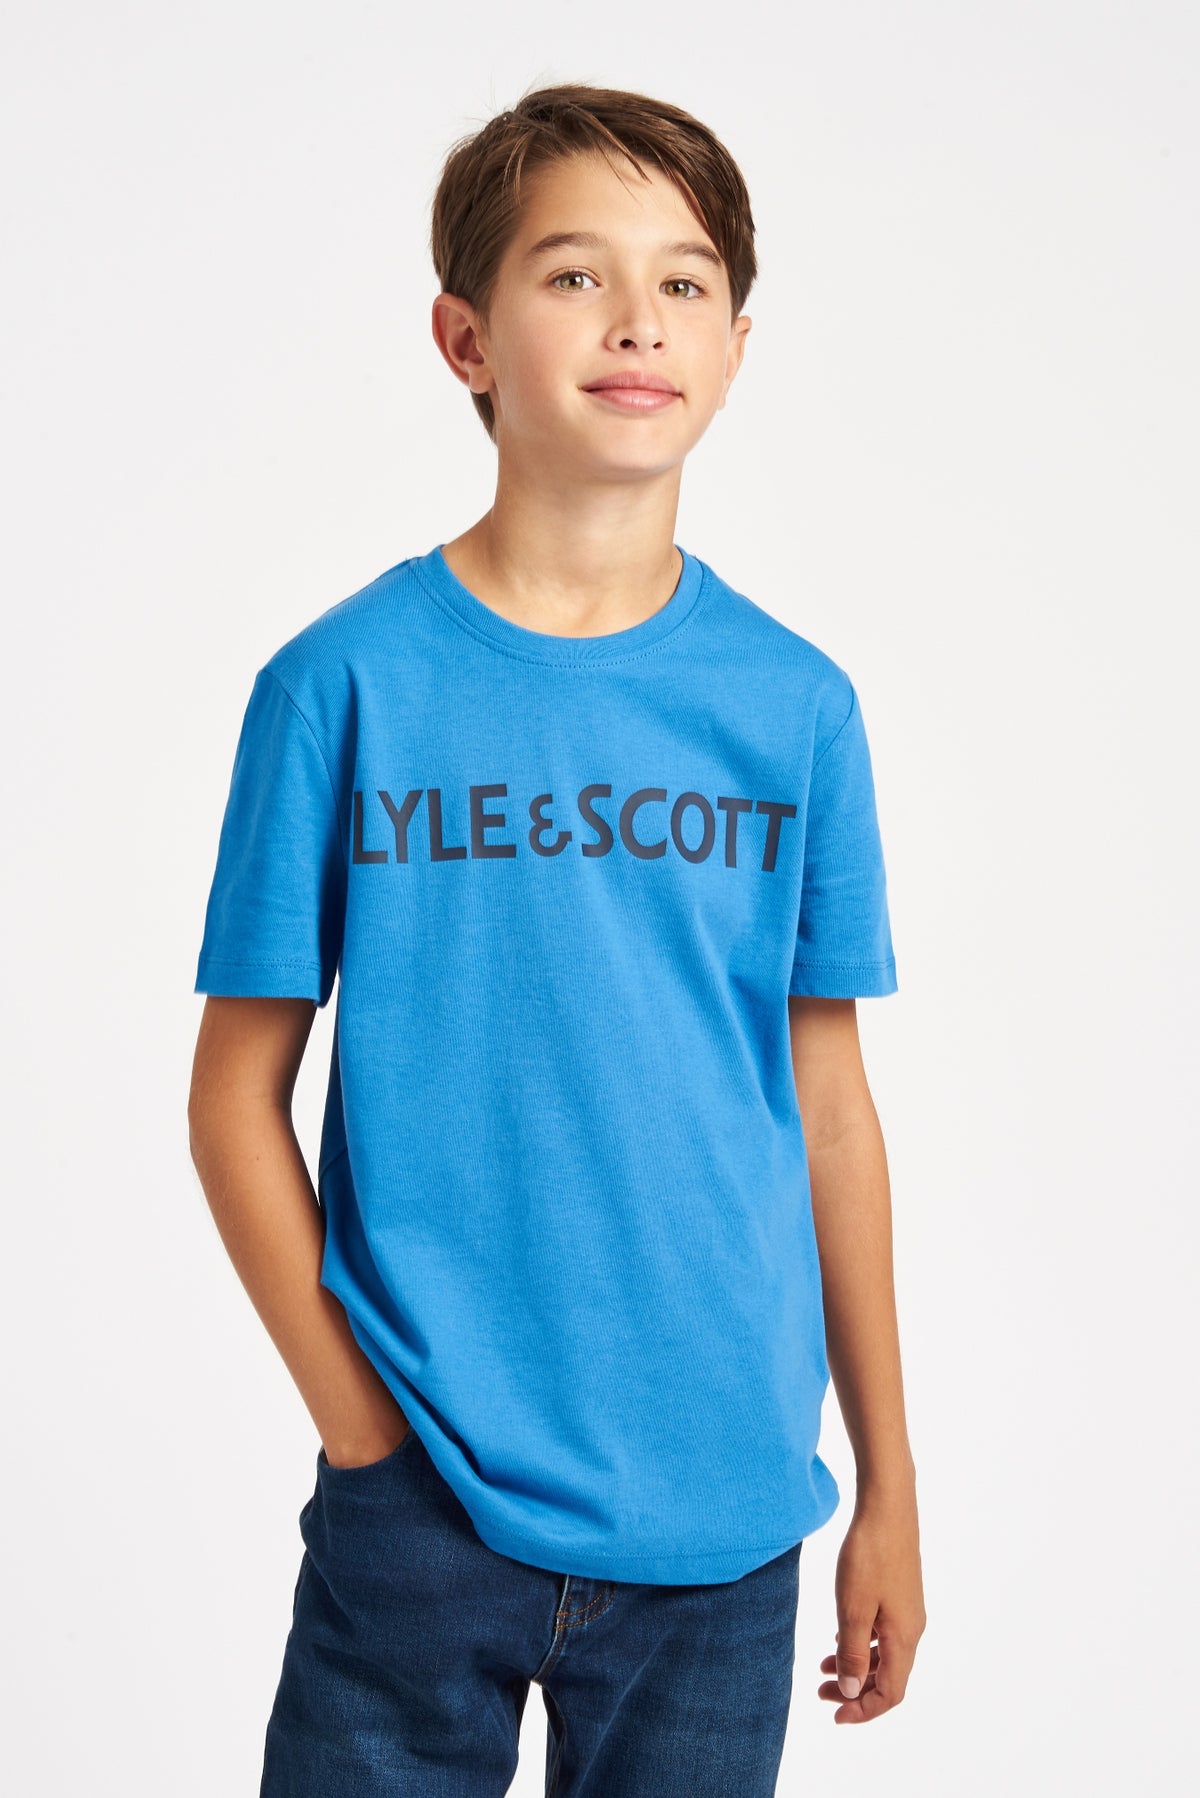 Lyle & Scott Boys 'Text Tee' Short Sleeved T-Shirt, 04, Lsc0896, Vallarta Blue